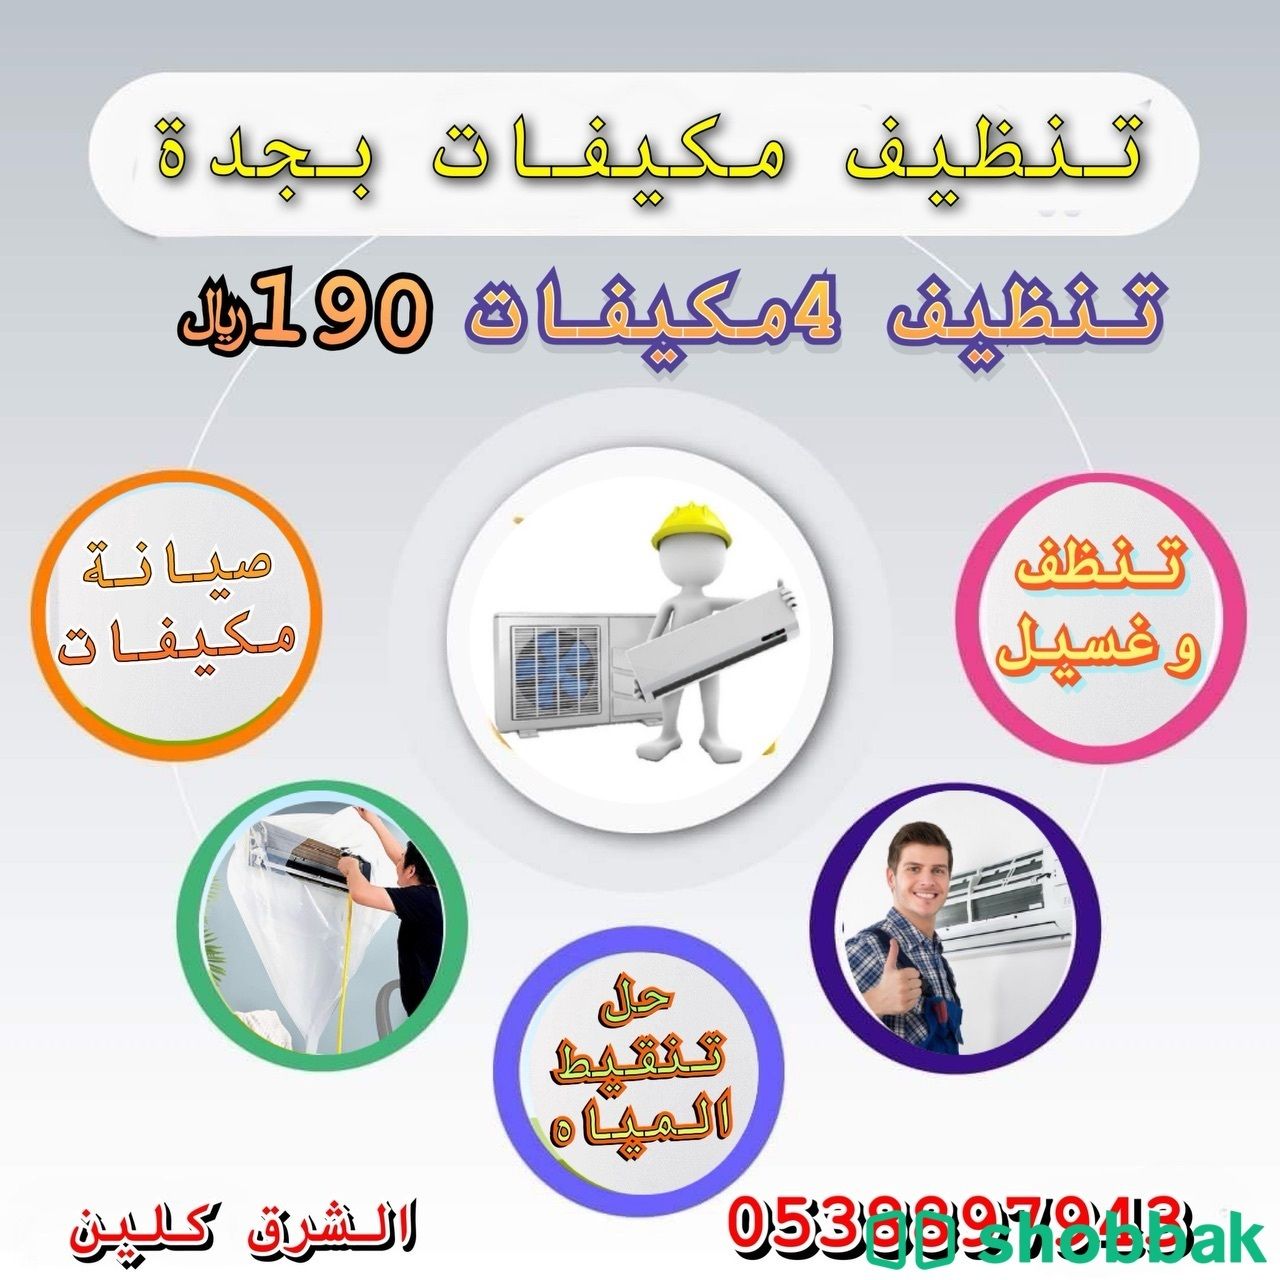 تنظيف مكيفات بجدة Shobbak Saudi Arabia